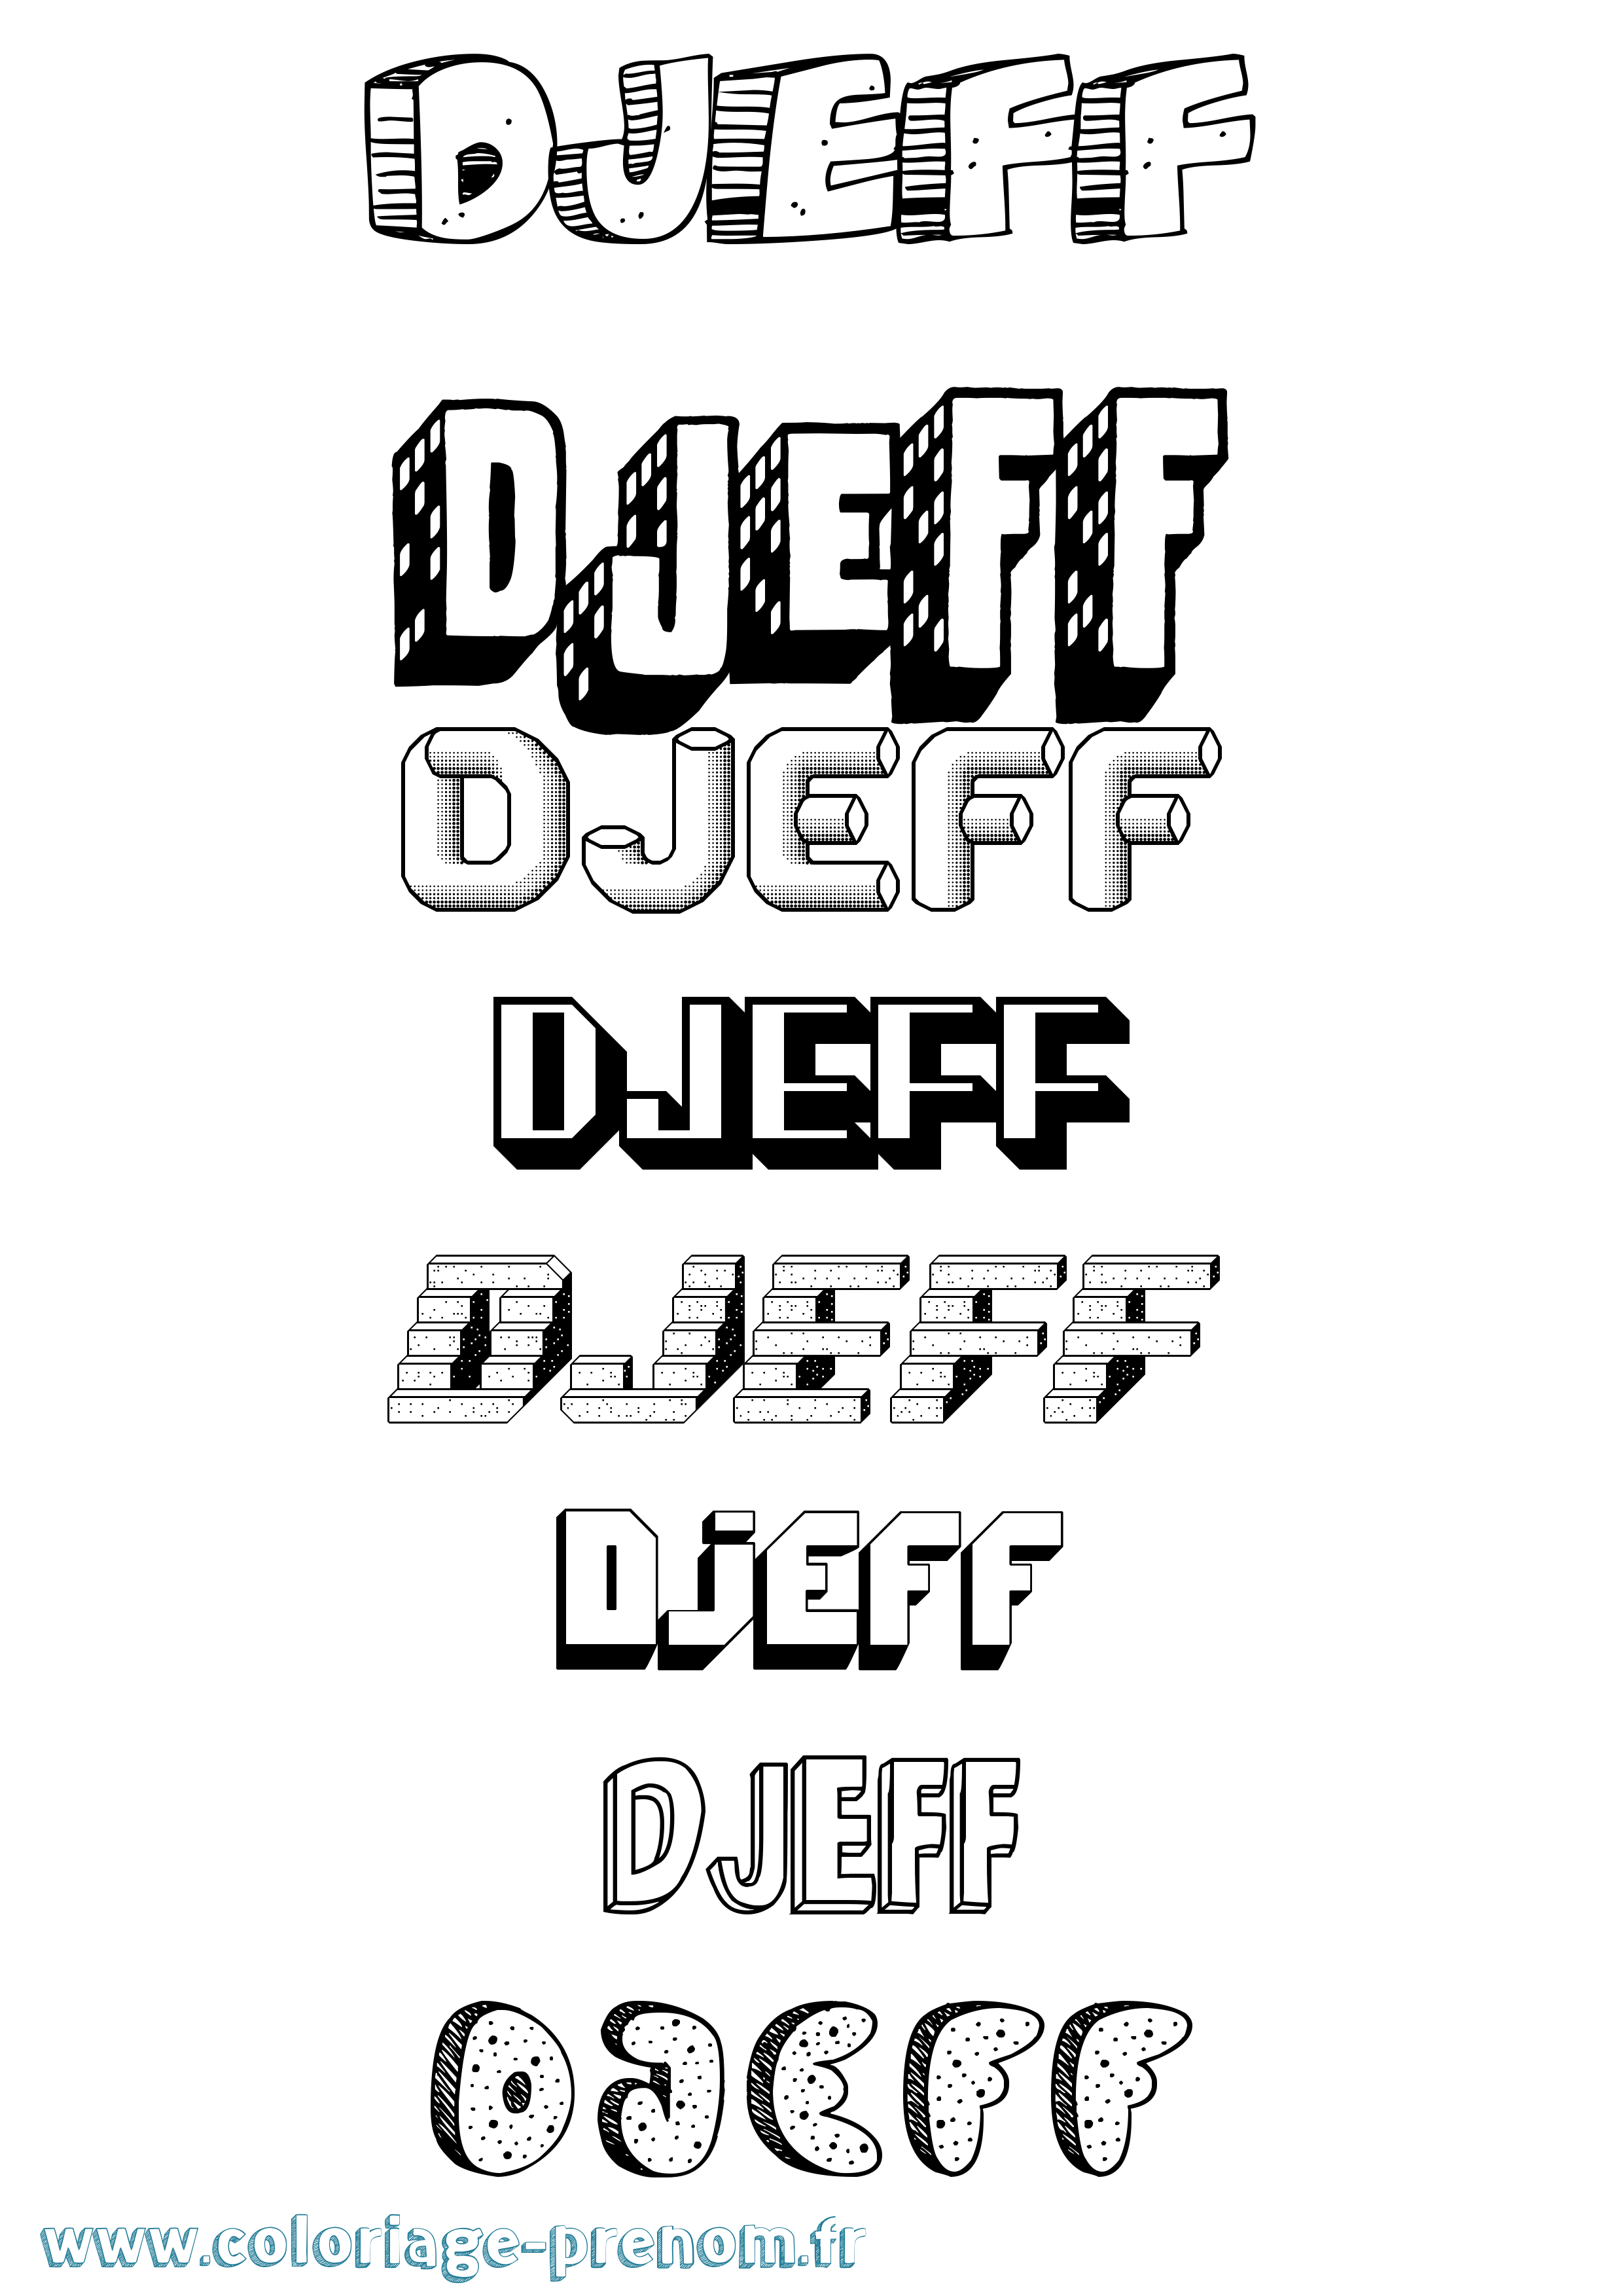 Coloriage prénom Djeff Effet 3D